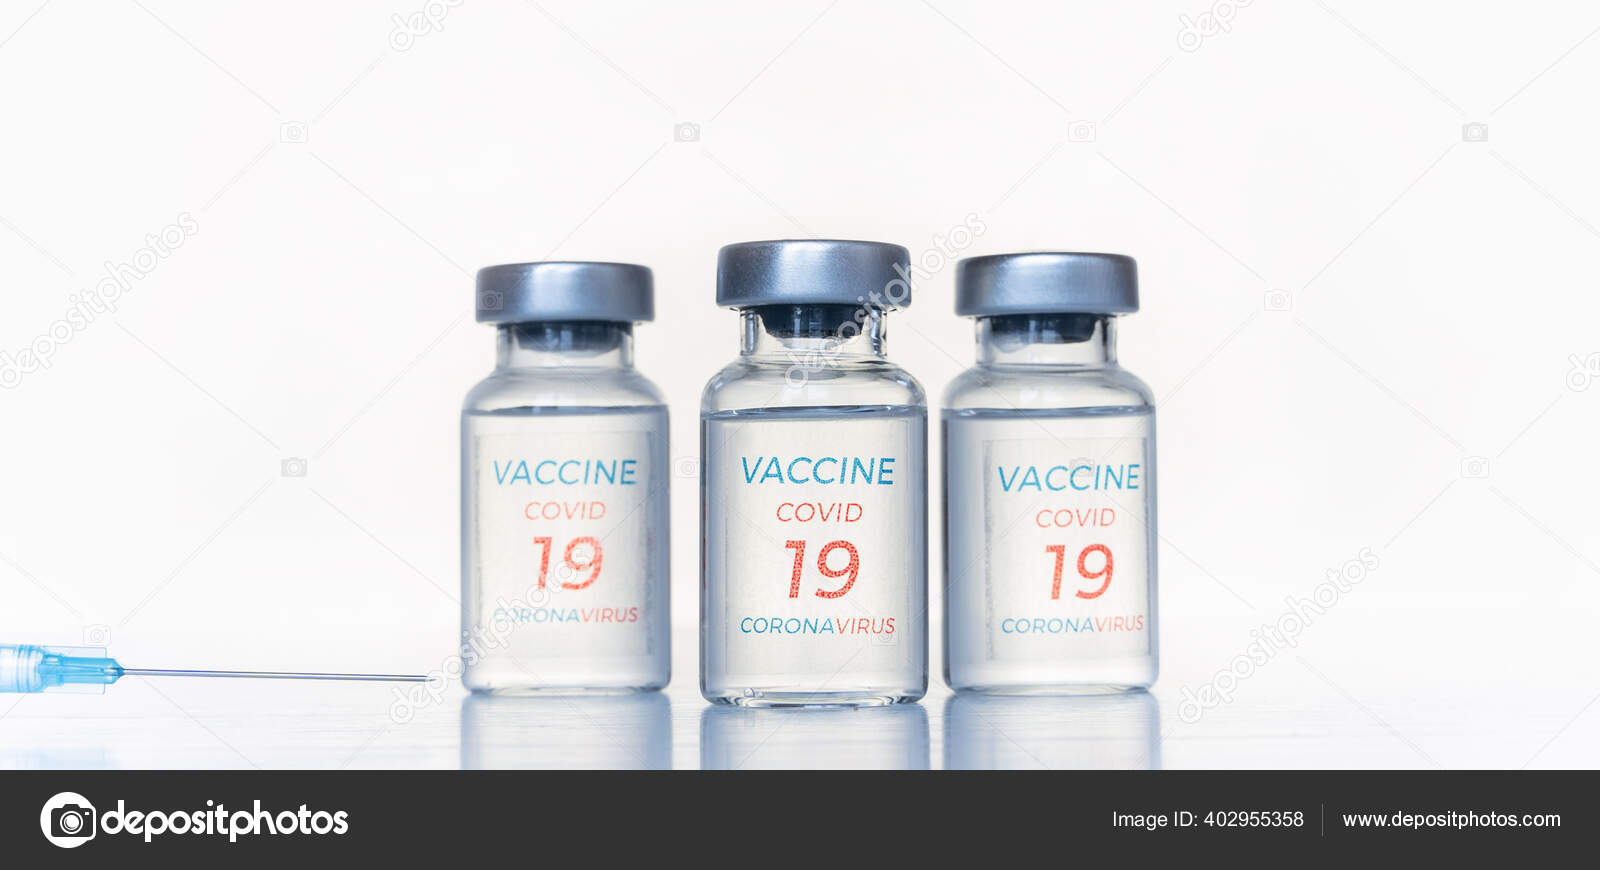 какая вакцина занимает 1 место